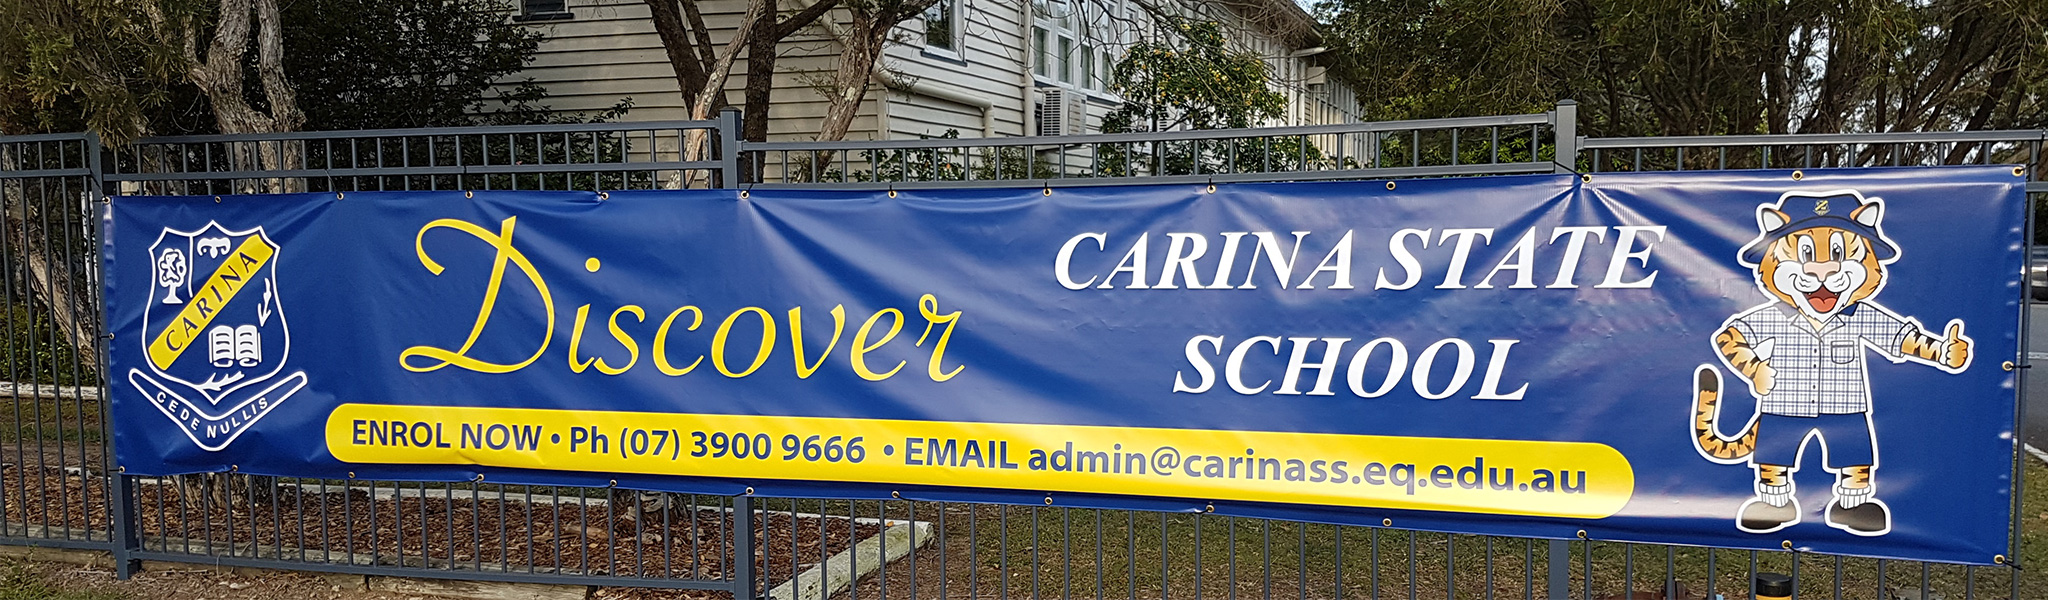 school banner on fence